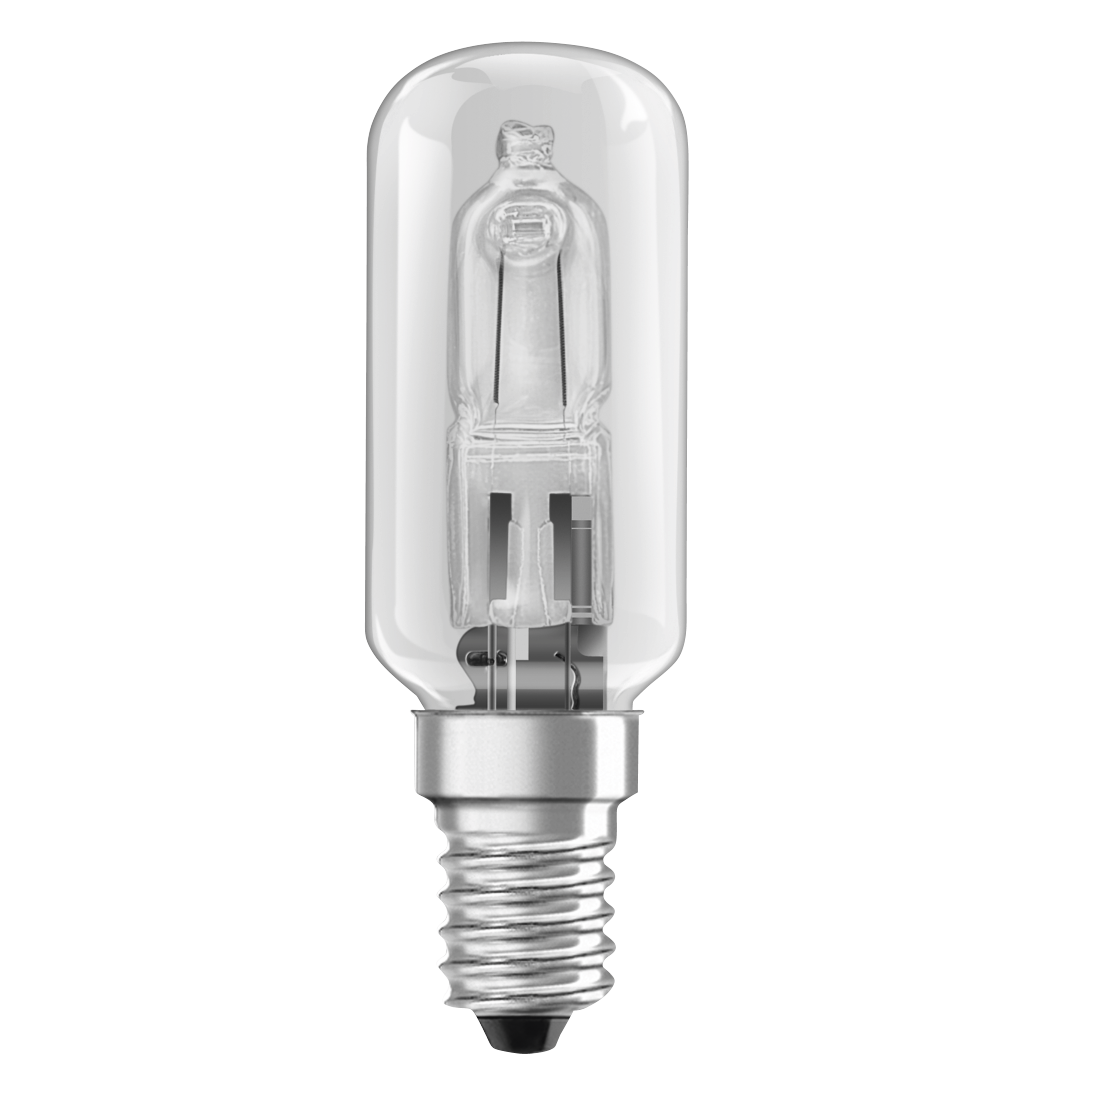 abx Druckfähige Abbildung - Xavax, Halogen-Dunstabzugshaubenlampe, 25W, Röhrenform, klar, E14